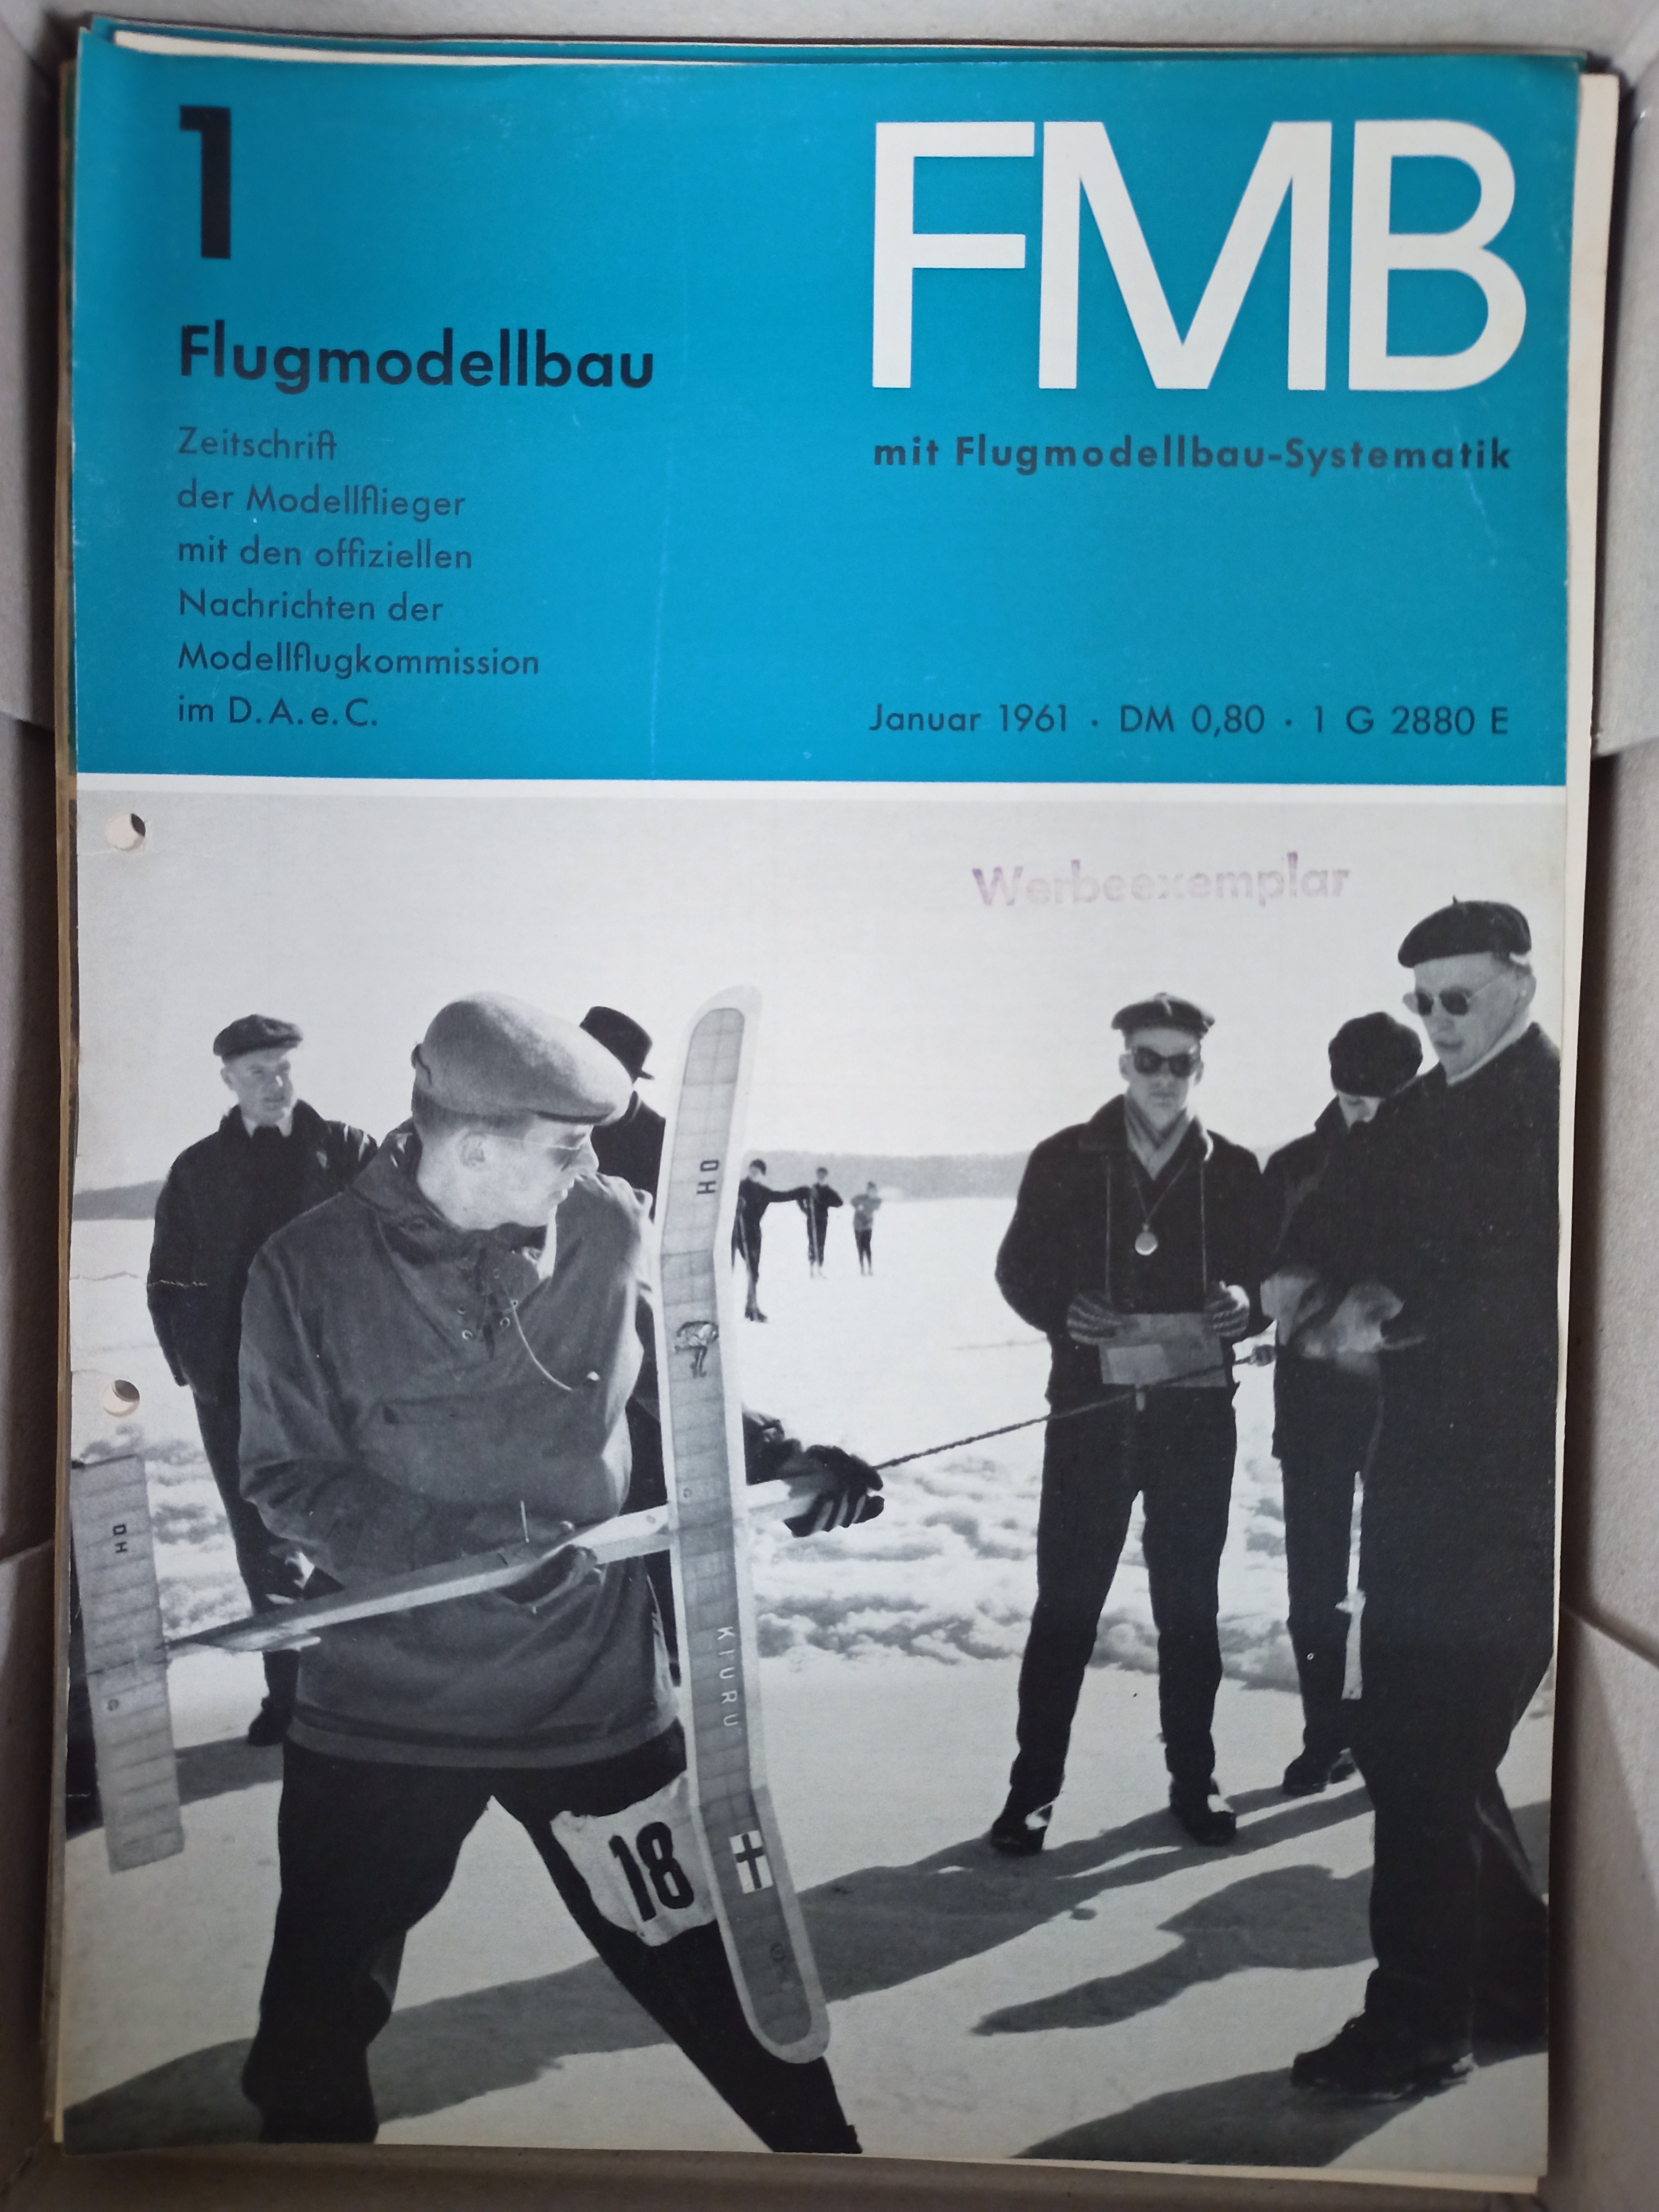 FMB (Deutsches Segelflugmuseum mit Modellflug CC BY-NC-SA)